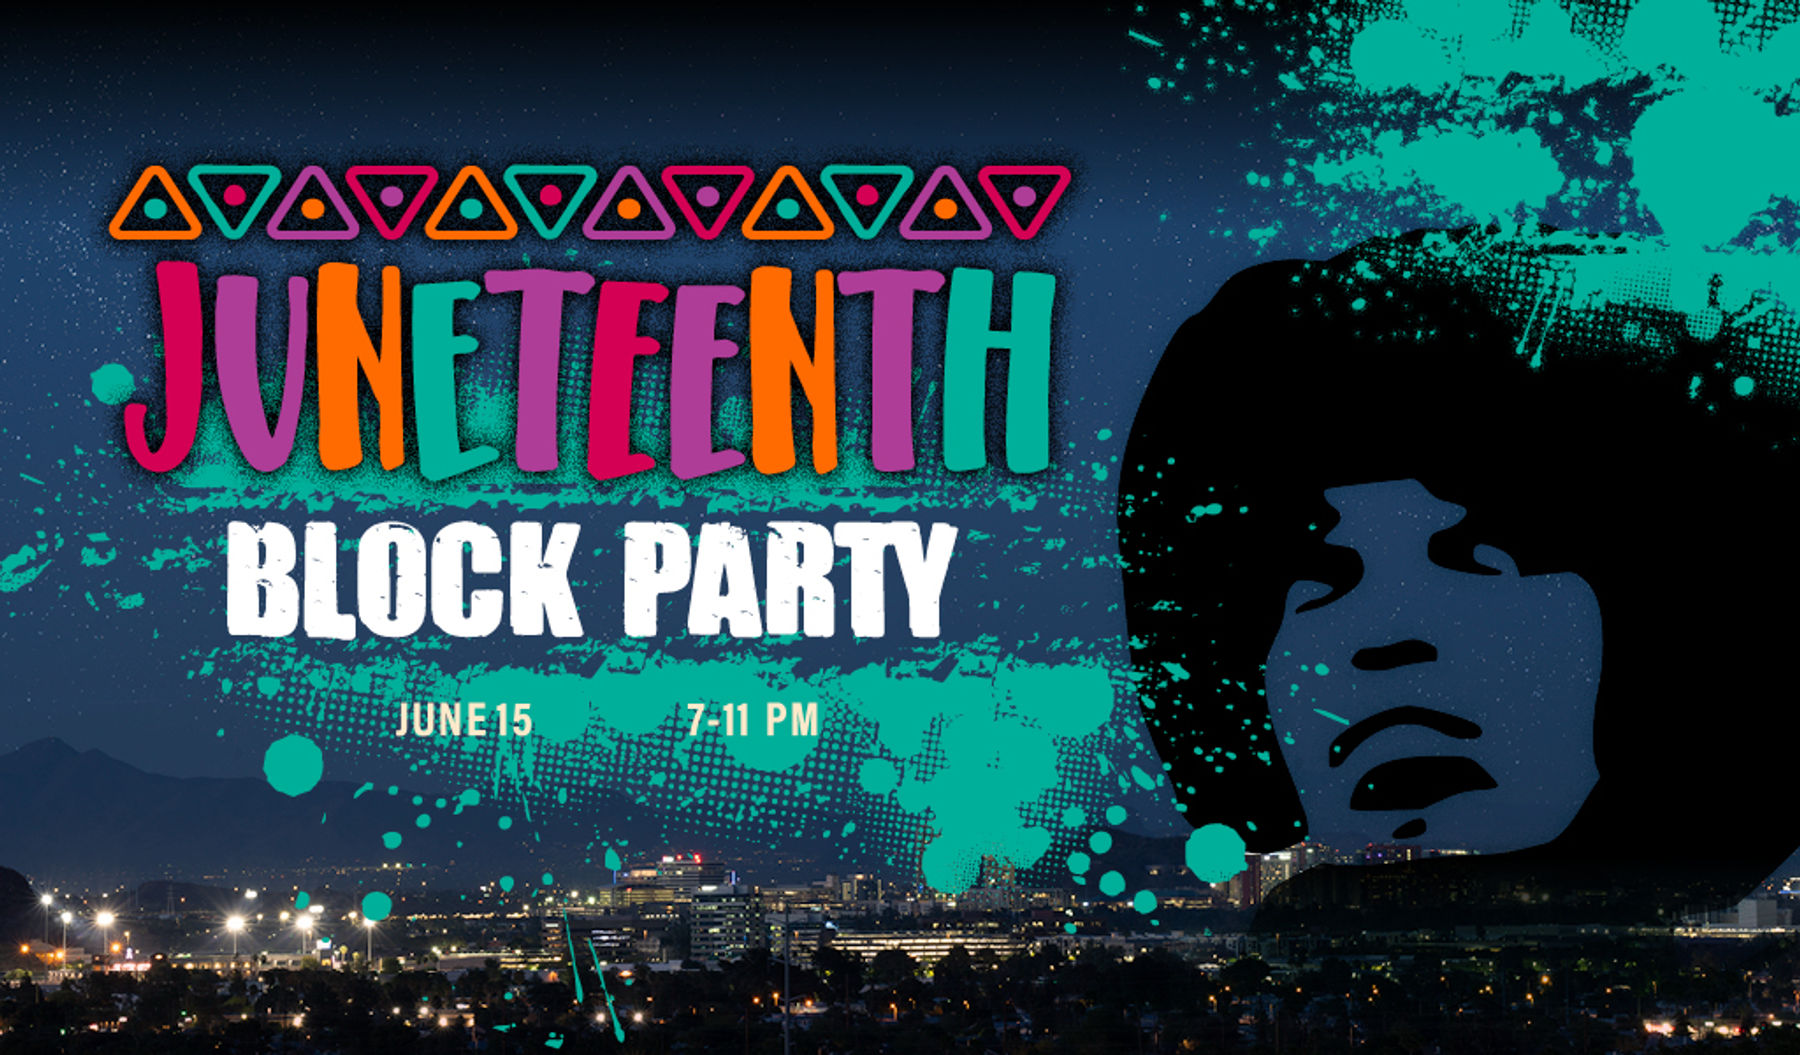 Juneteenth Block Party